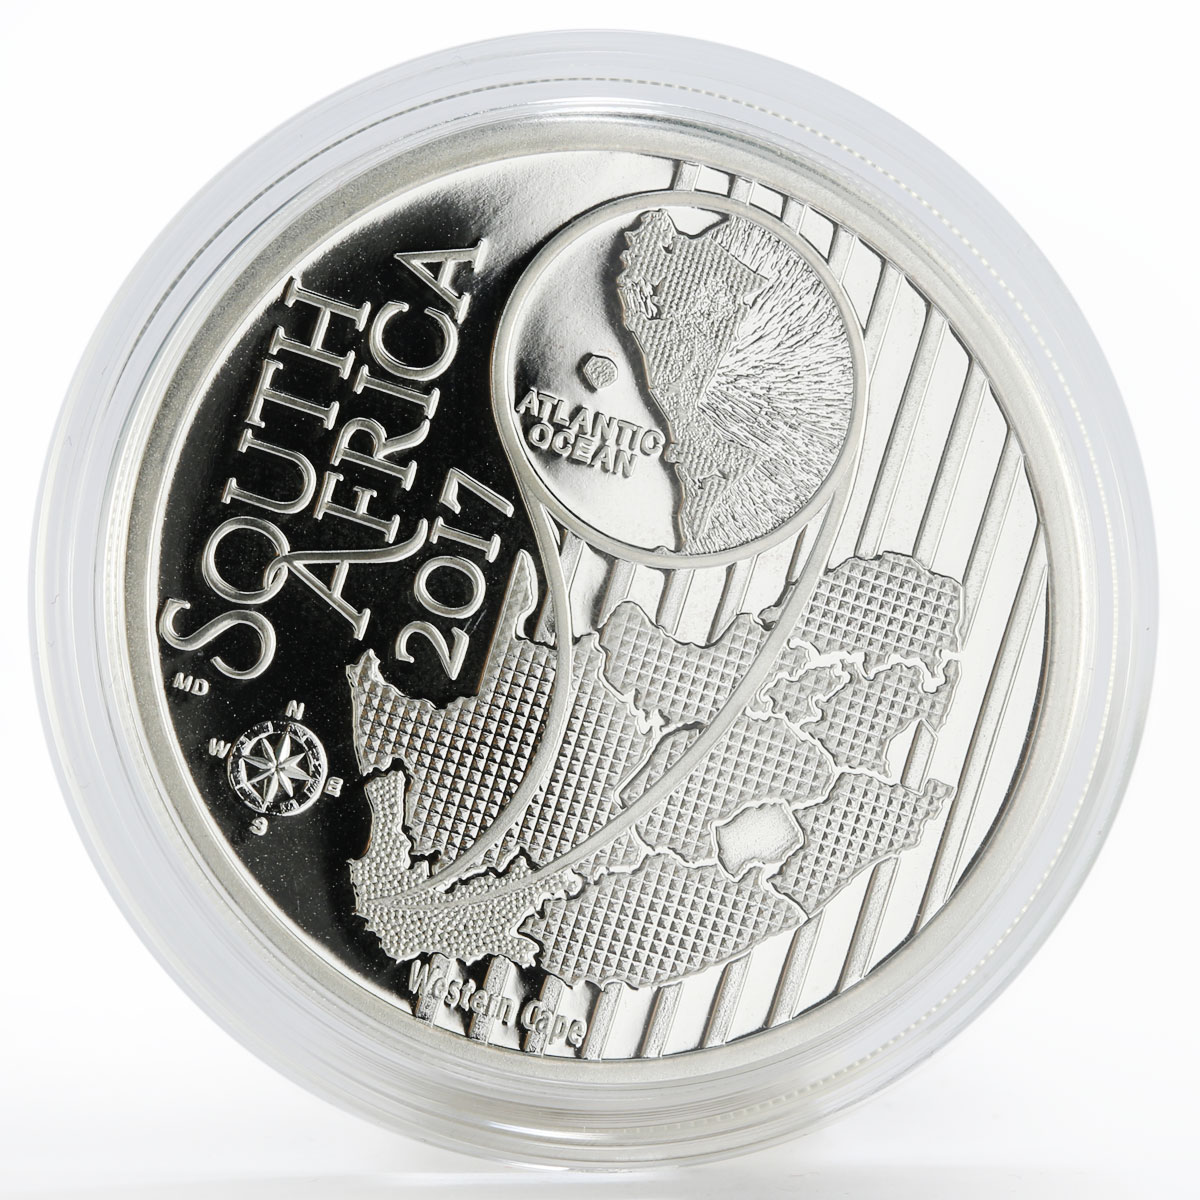 South Africa 10 rand Caspian Tern Hydroprogne Caspia silver colour coin 2017